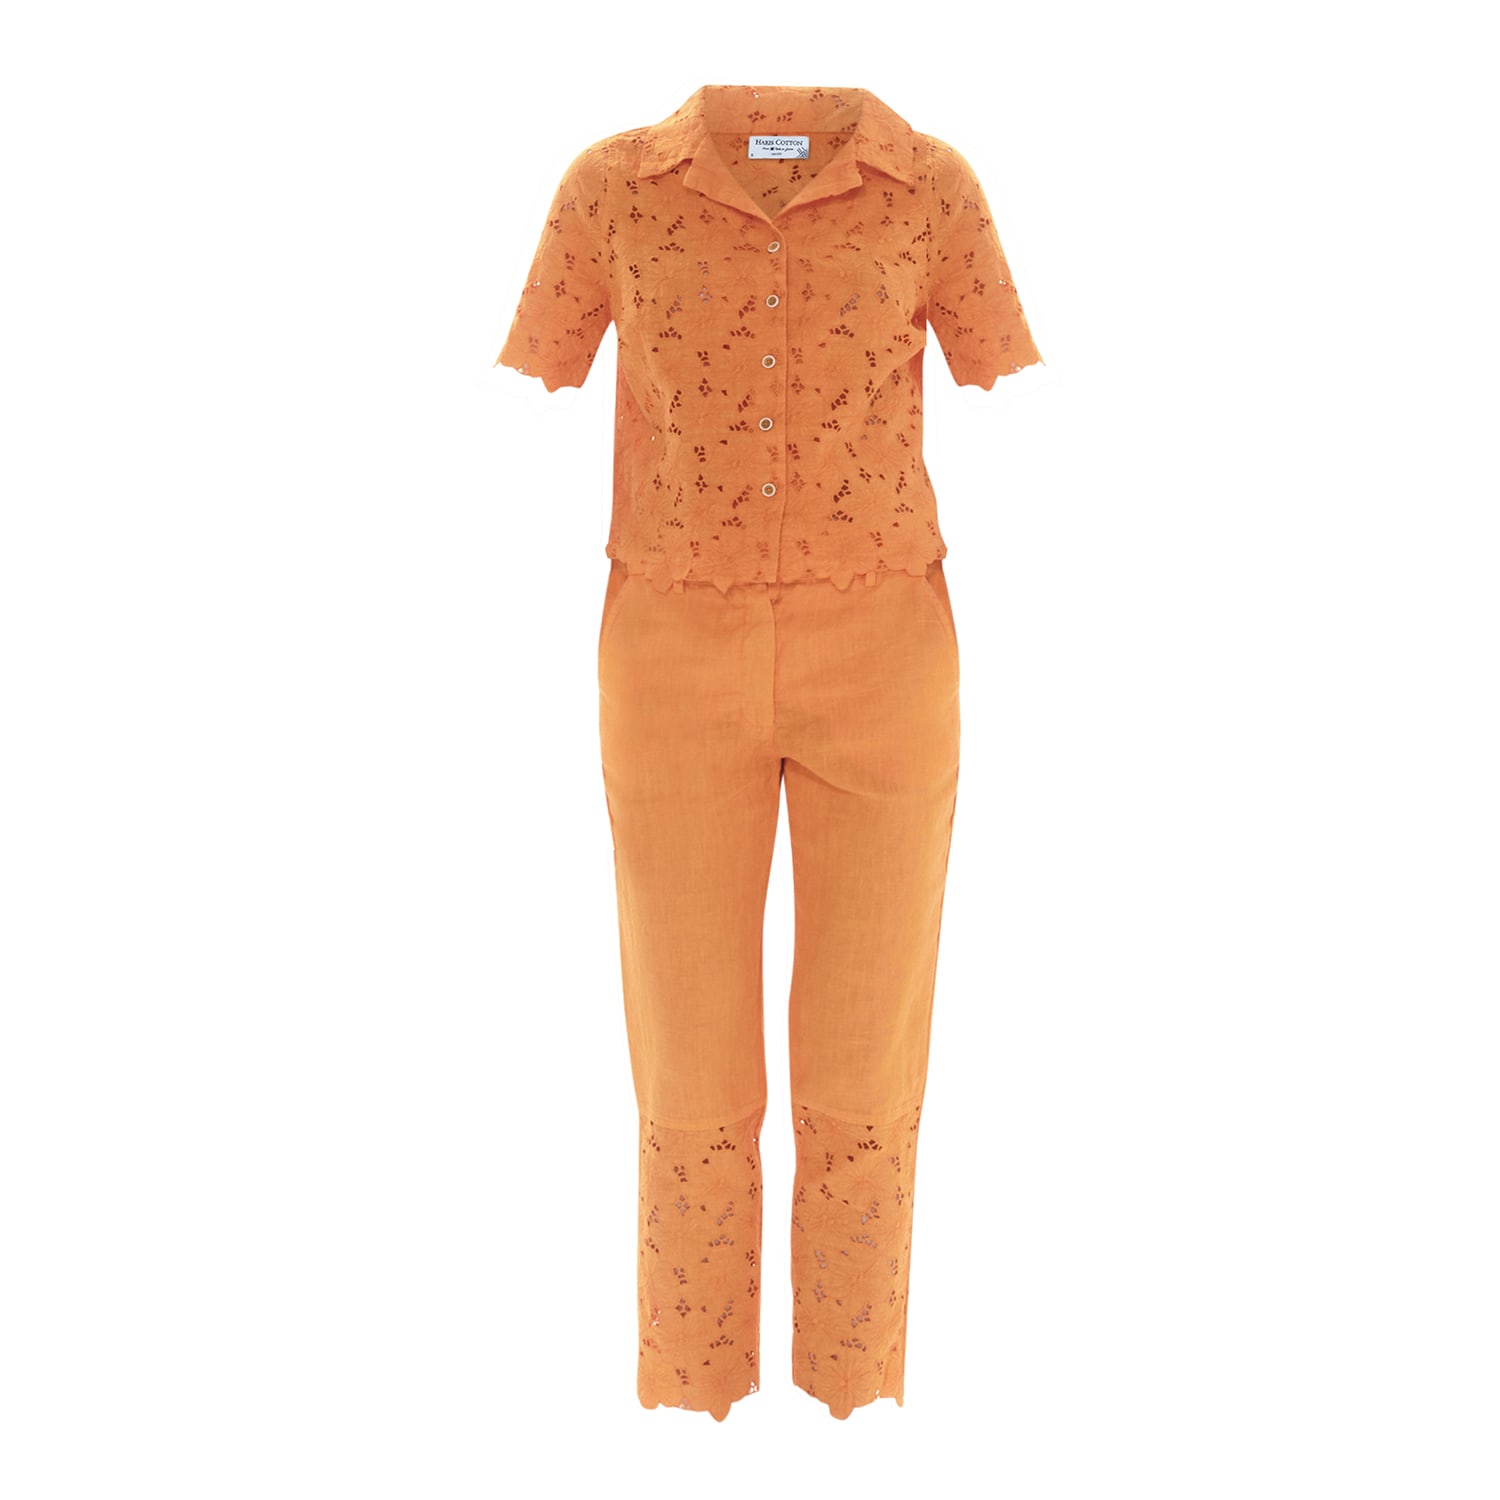 Haris Cotton Women's Yellow / Orange Eyelet Embroidery Scallop Trim Shirt With Short Sleeve - Lotus